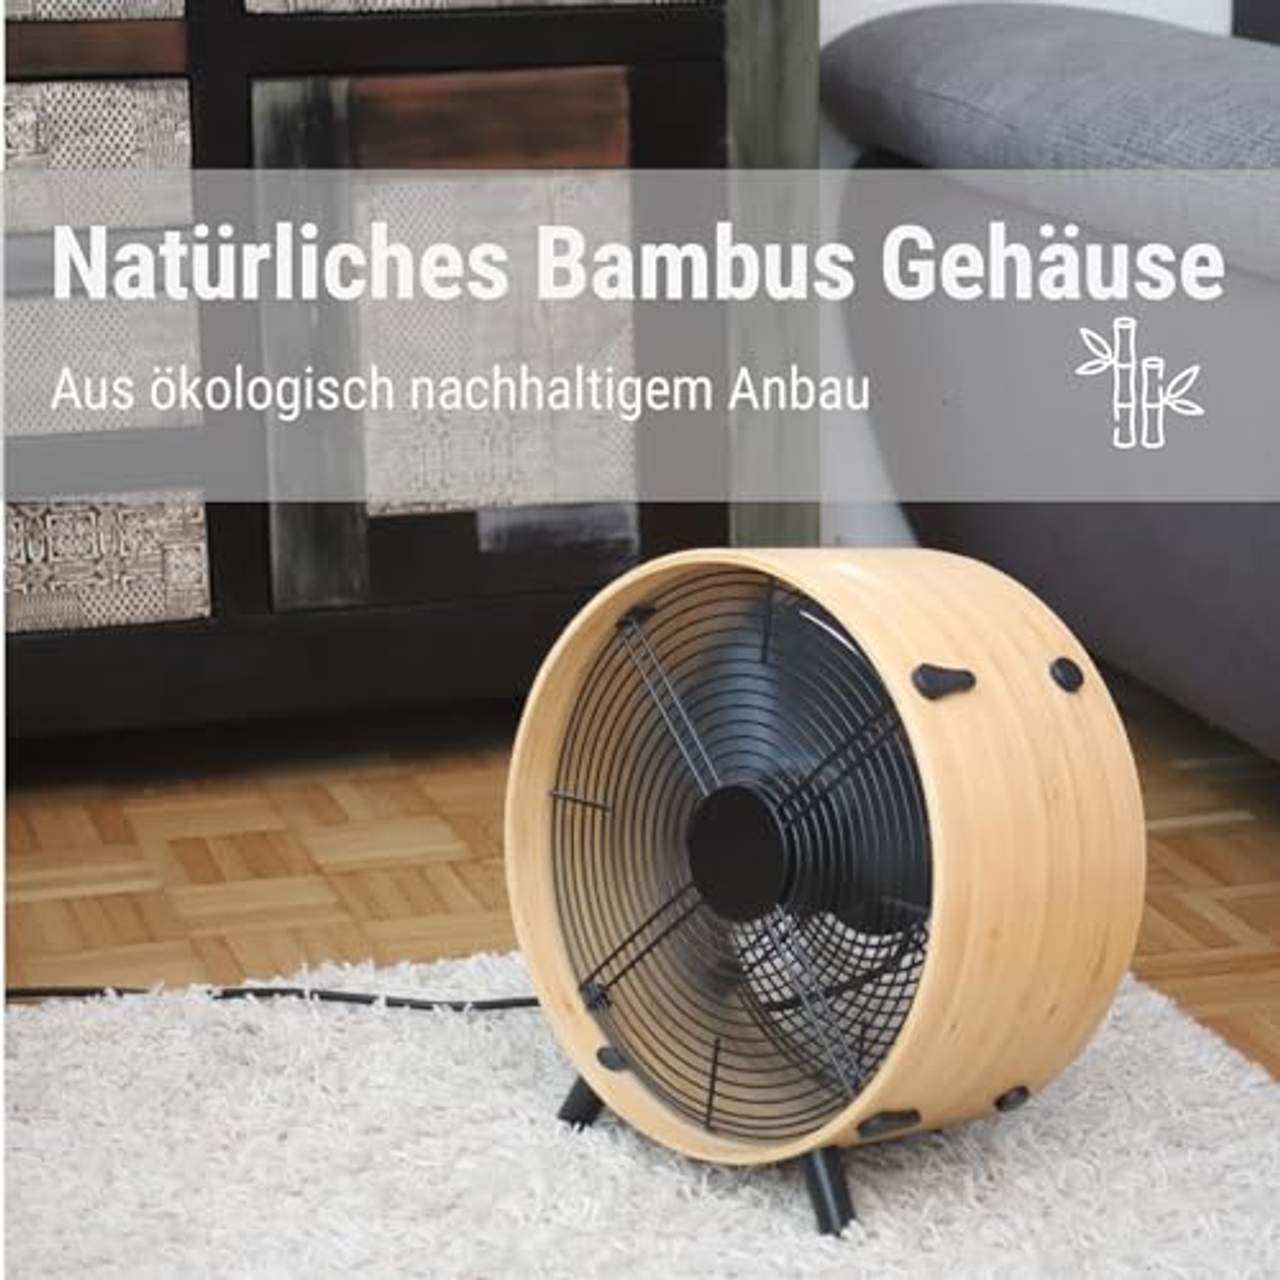 Stadler Form Design Ventilator Otto Bamboo